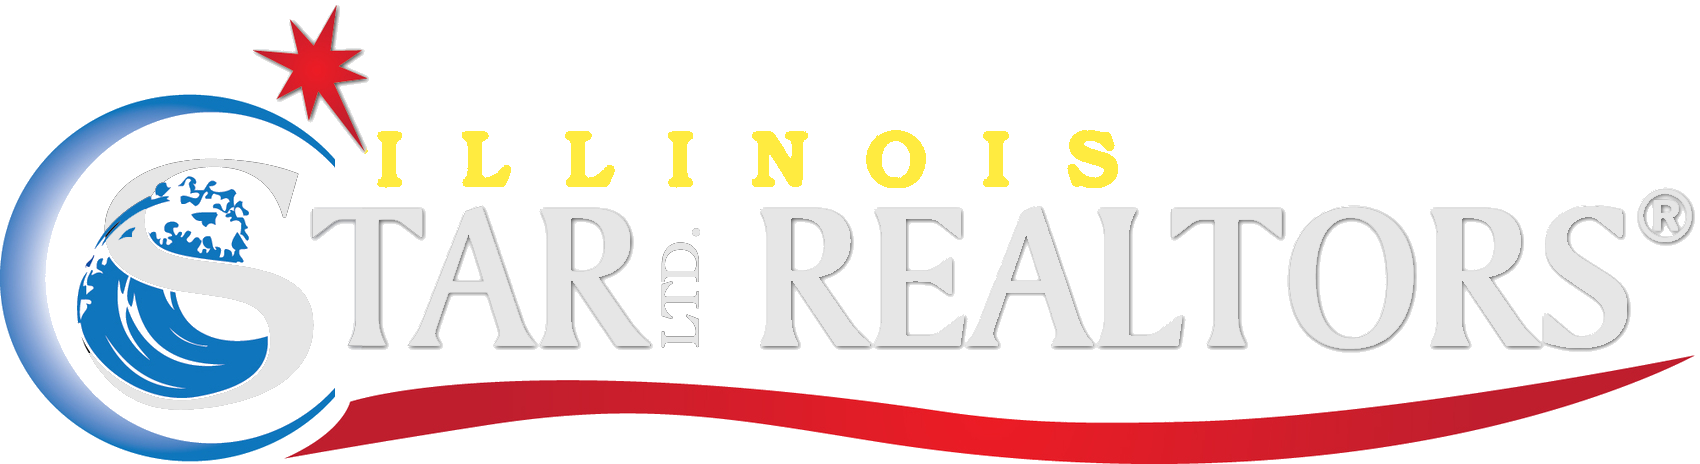 Illinois Star, Ltd. REALTORS® 